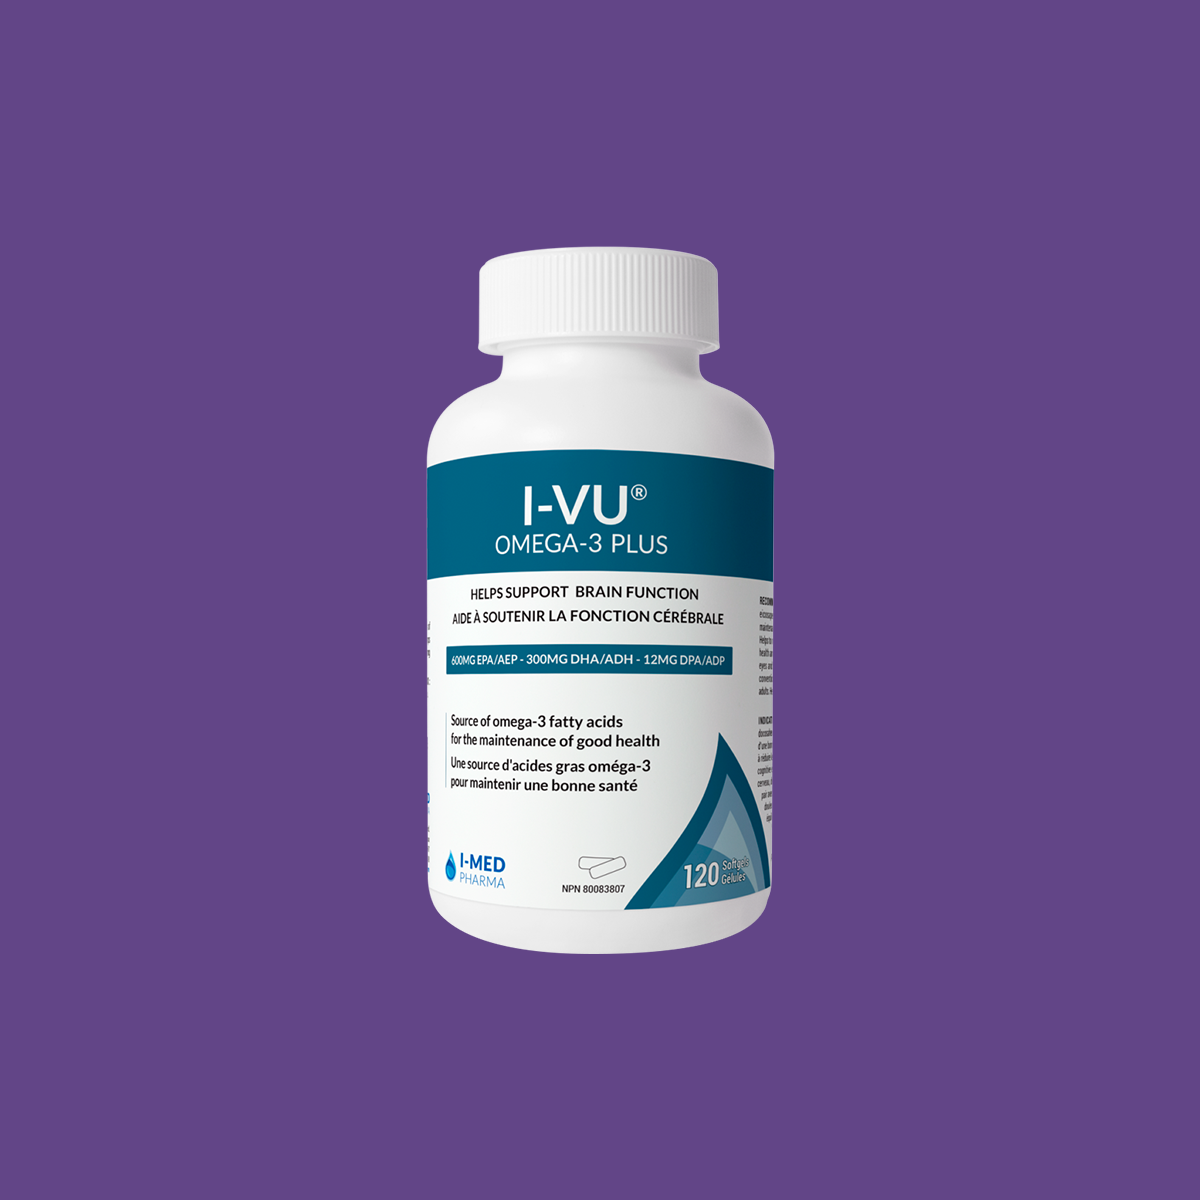 I-Med Pharma I-VU OMEGA-3 Dry Eye Formula (120 Softfels)